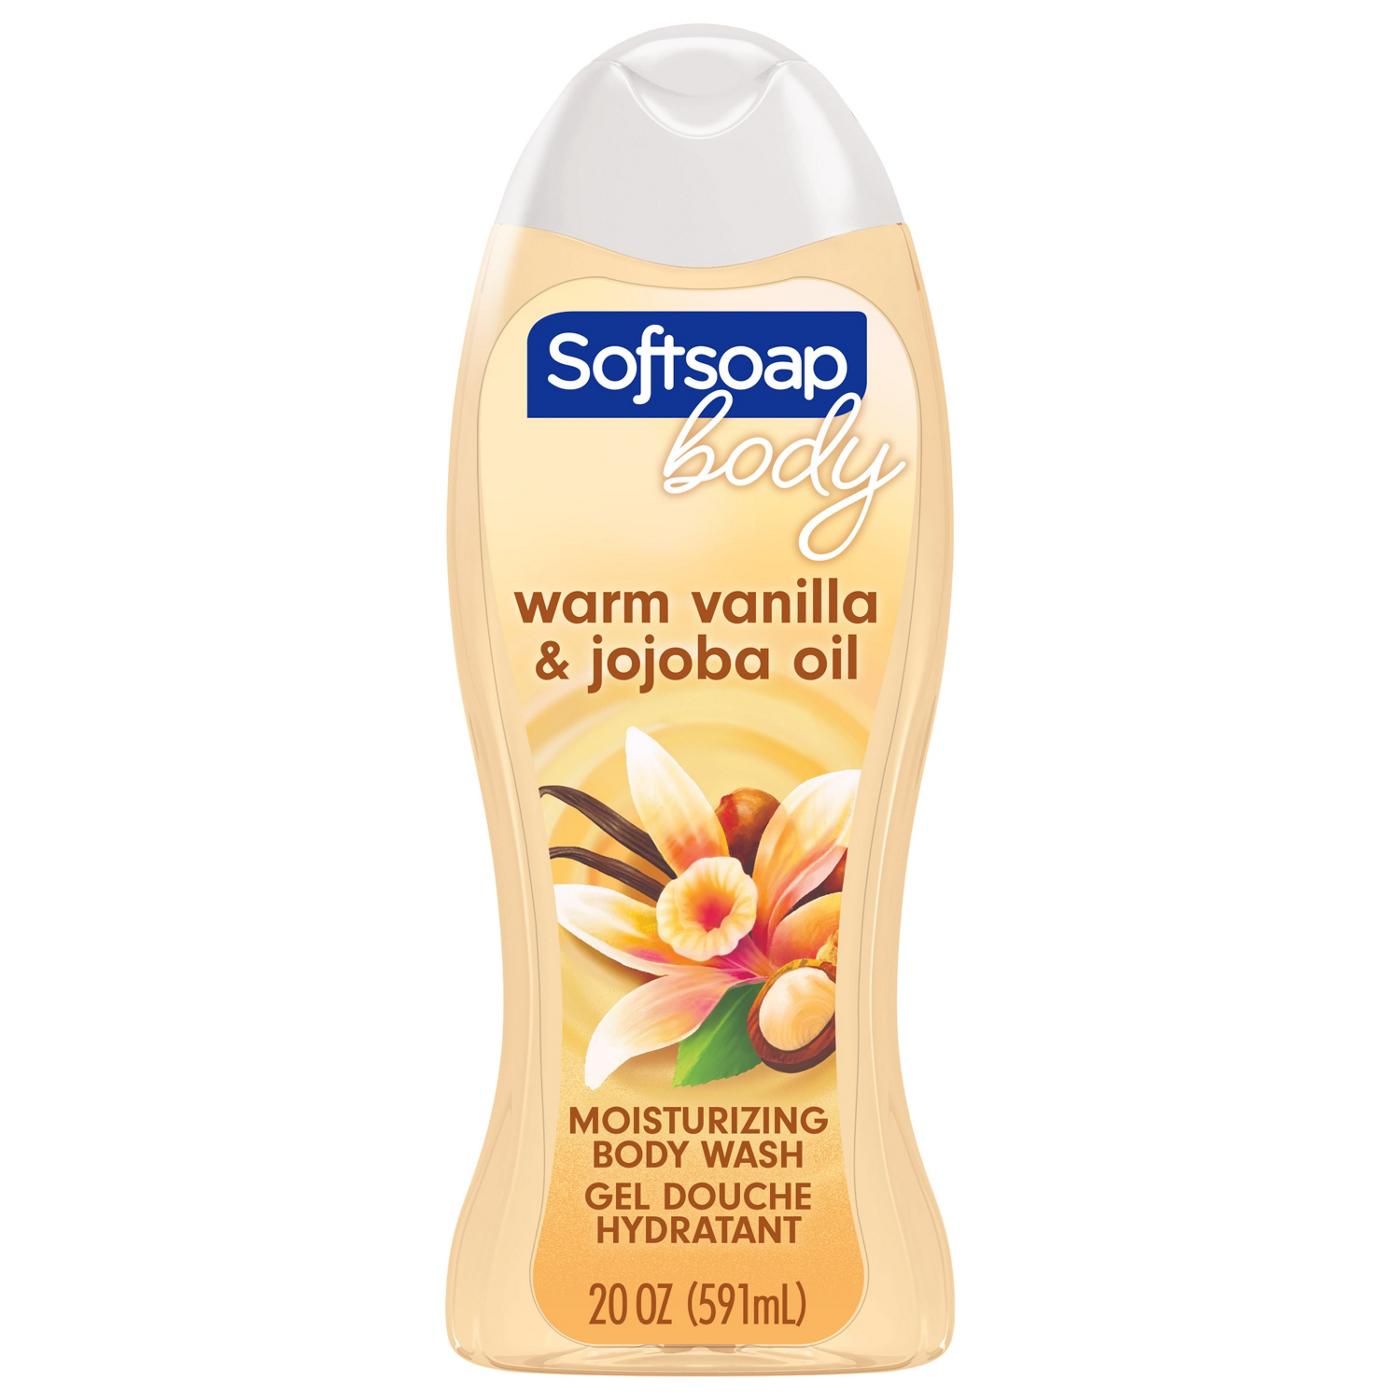 Softsoap Body Moisturizing Body Wash - Warm Vanilla & Jojoba Oil; image 1 of 9